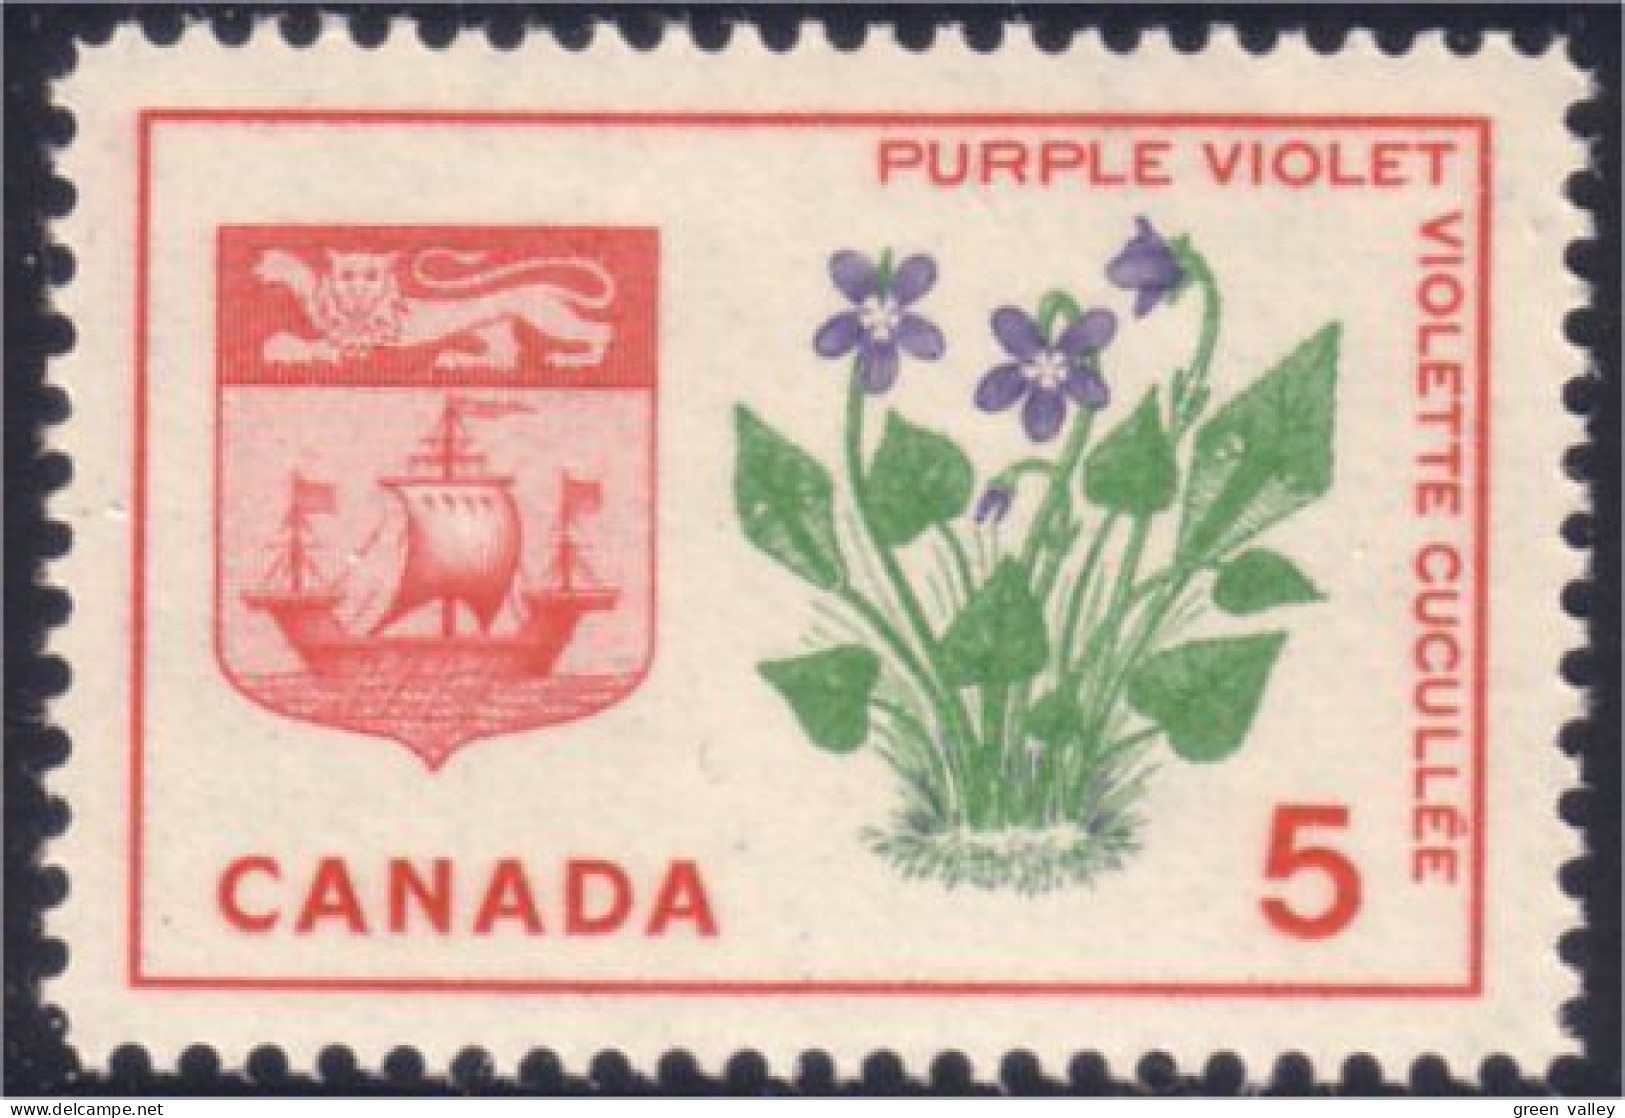 Canada Purple Violet Violette Armoiries Coat Of Arms MNH ** Neuf SC (04-21c) - Briefmarken